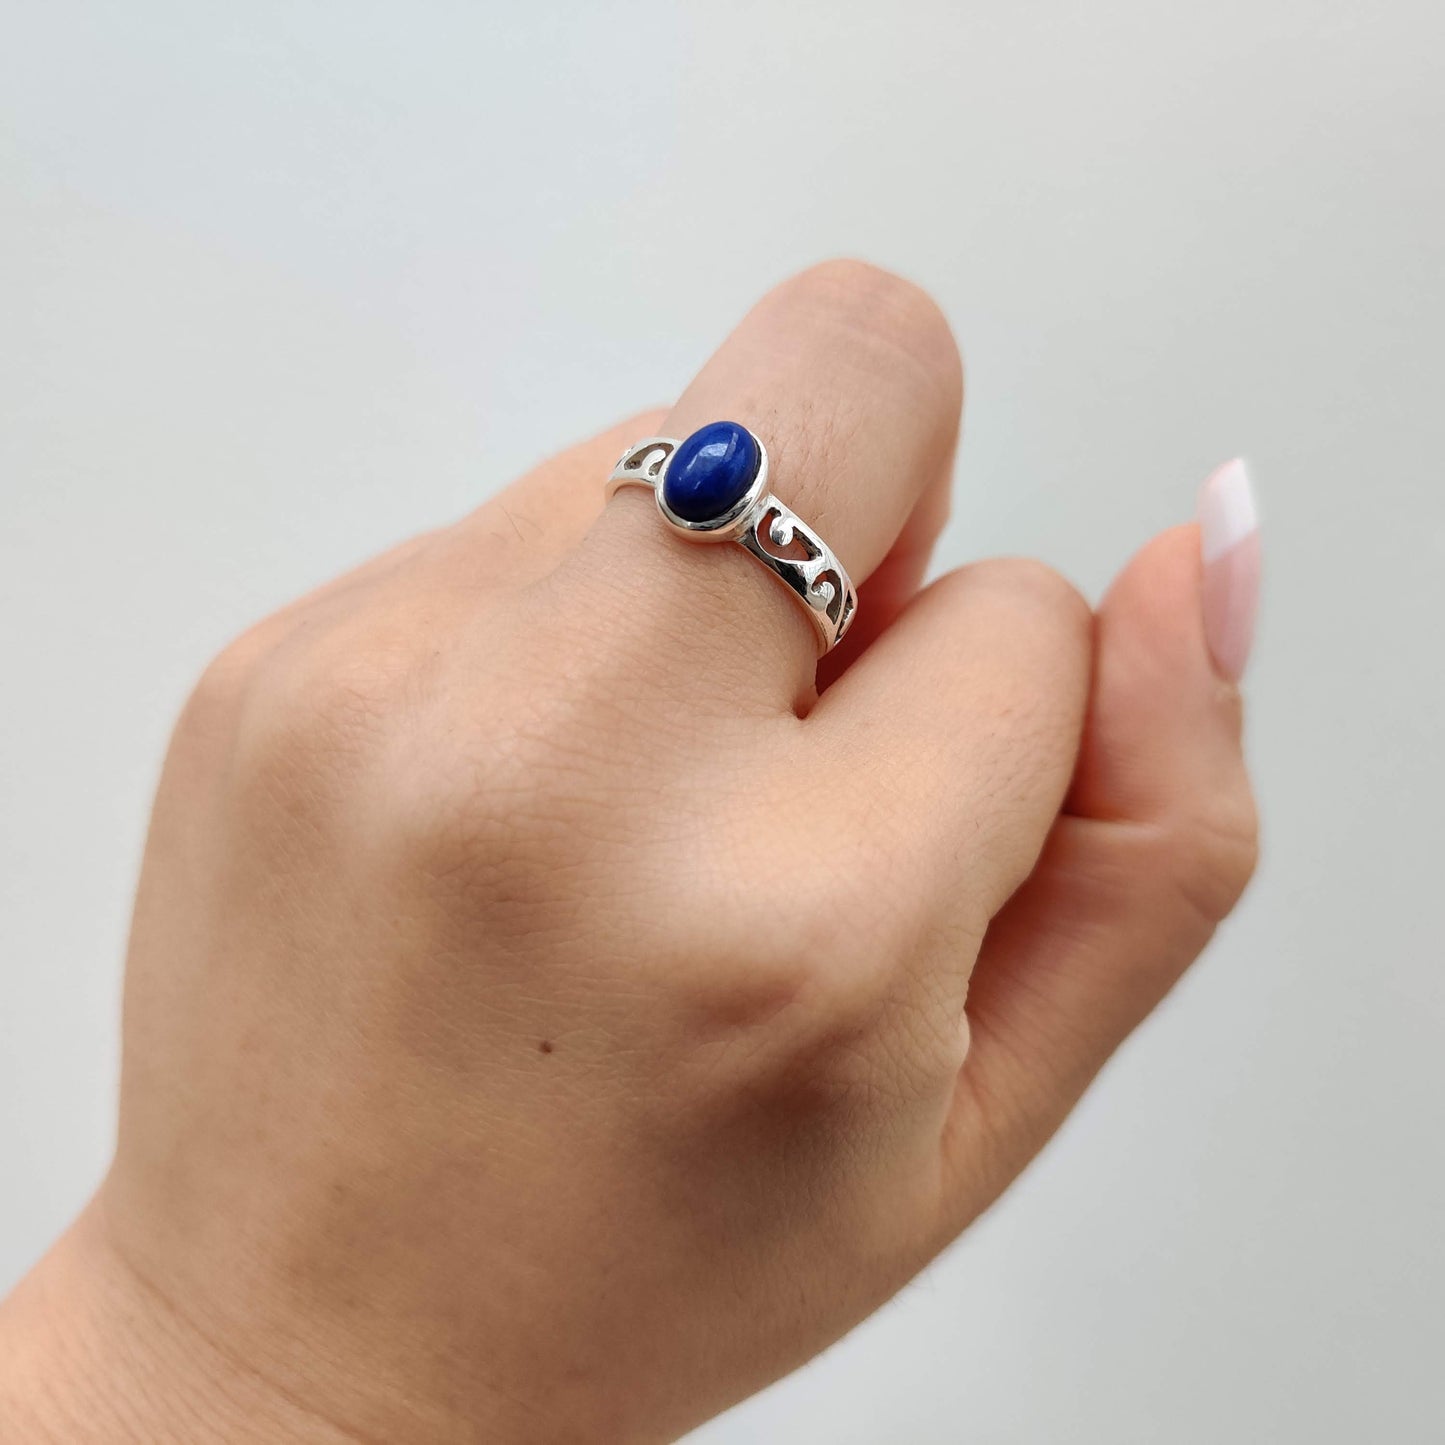 Lapis Lazuli Oval 925 Sterling Silver Ring with Koru Design - Rivendell Shop